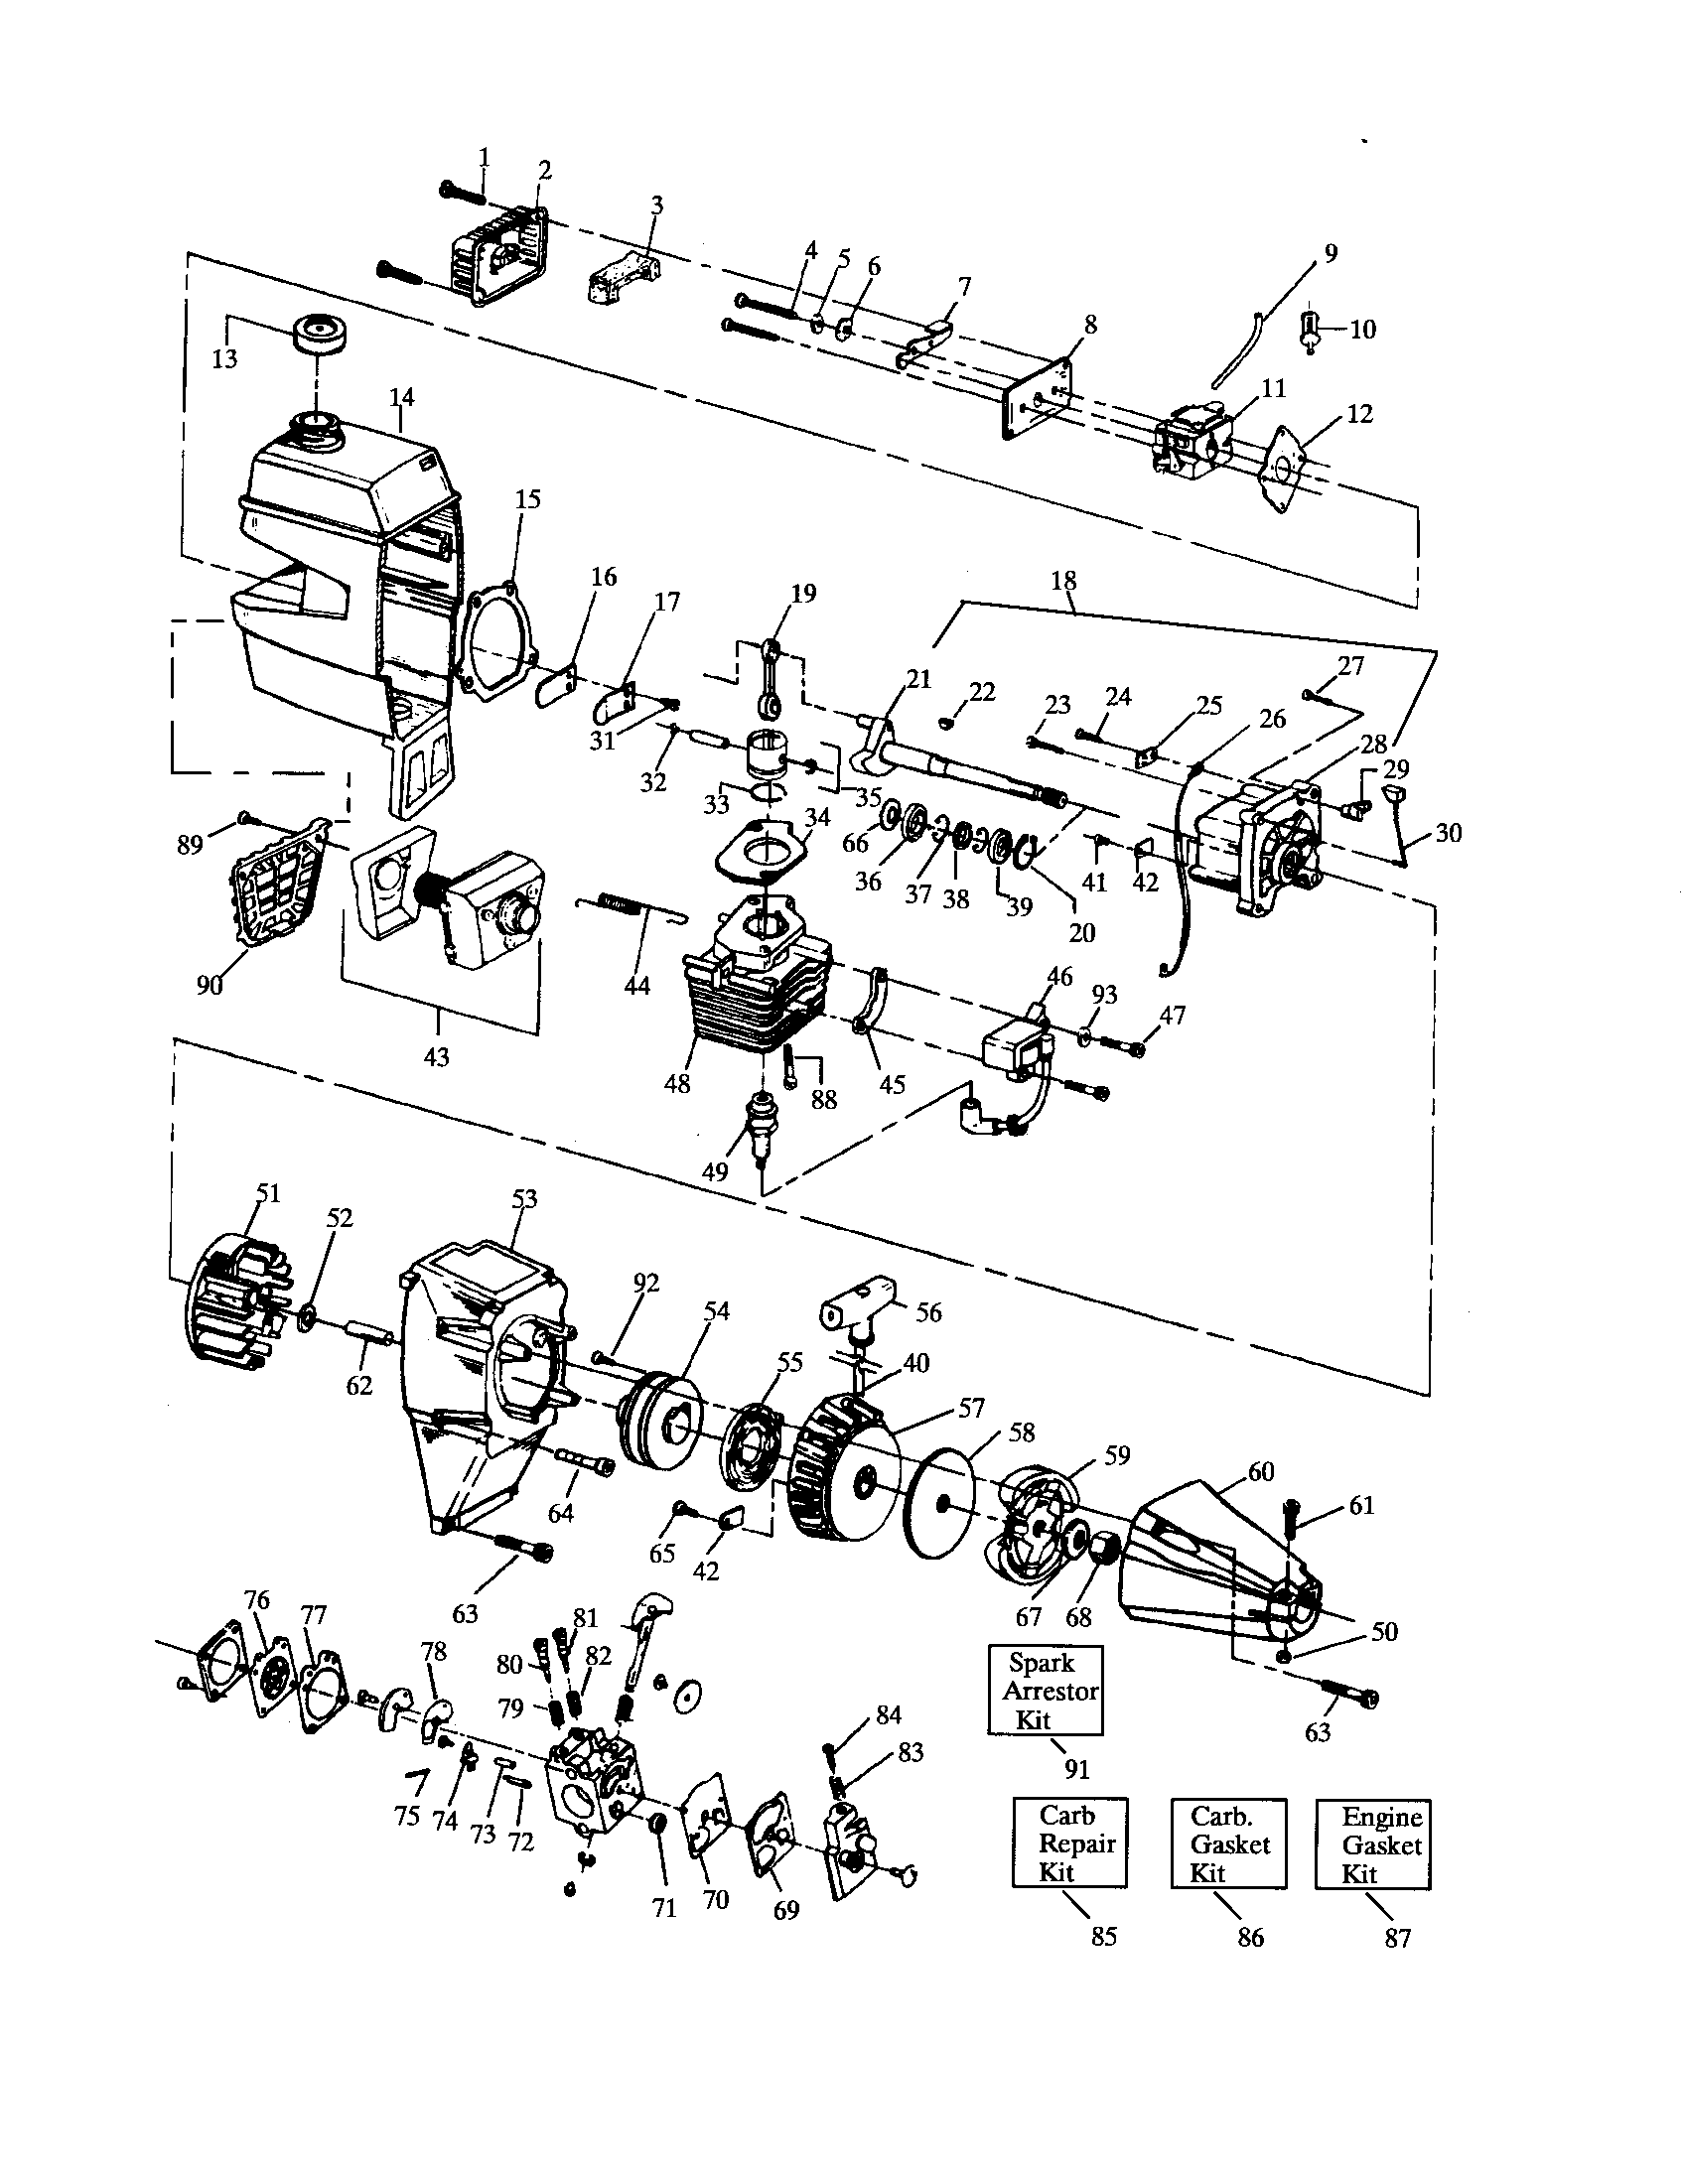 32 Craftsman Weed Wacker Parts Diagram Wiring Diagram List